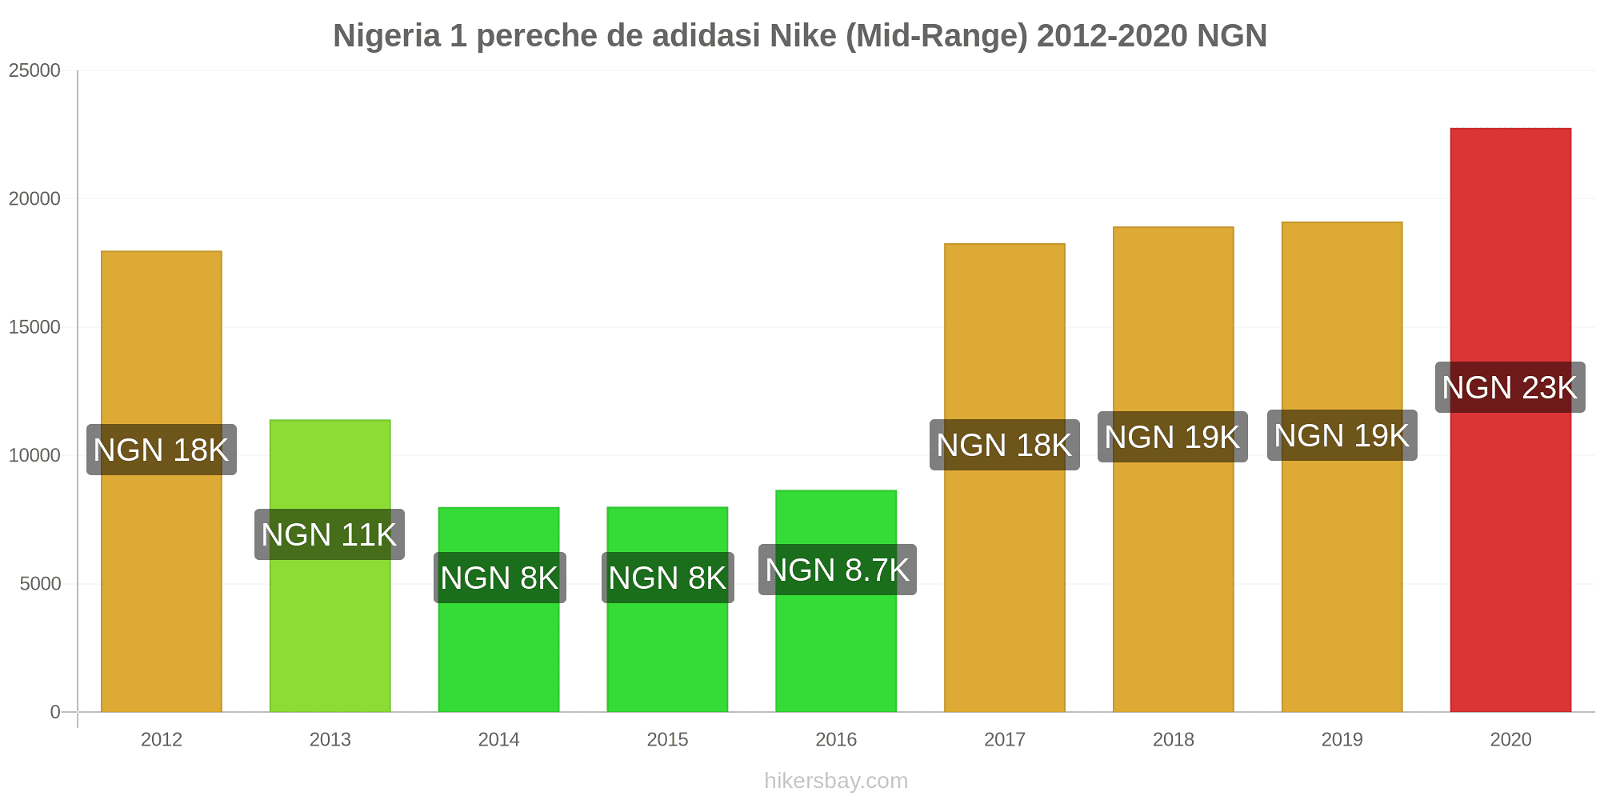 Nigeria modificări de preț 1 pereche de adidasi Nike (Mid-Range) hikersbay.com